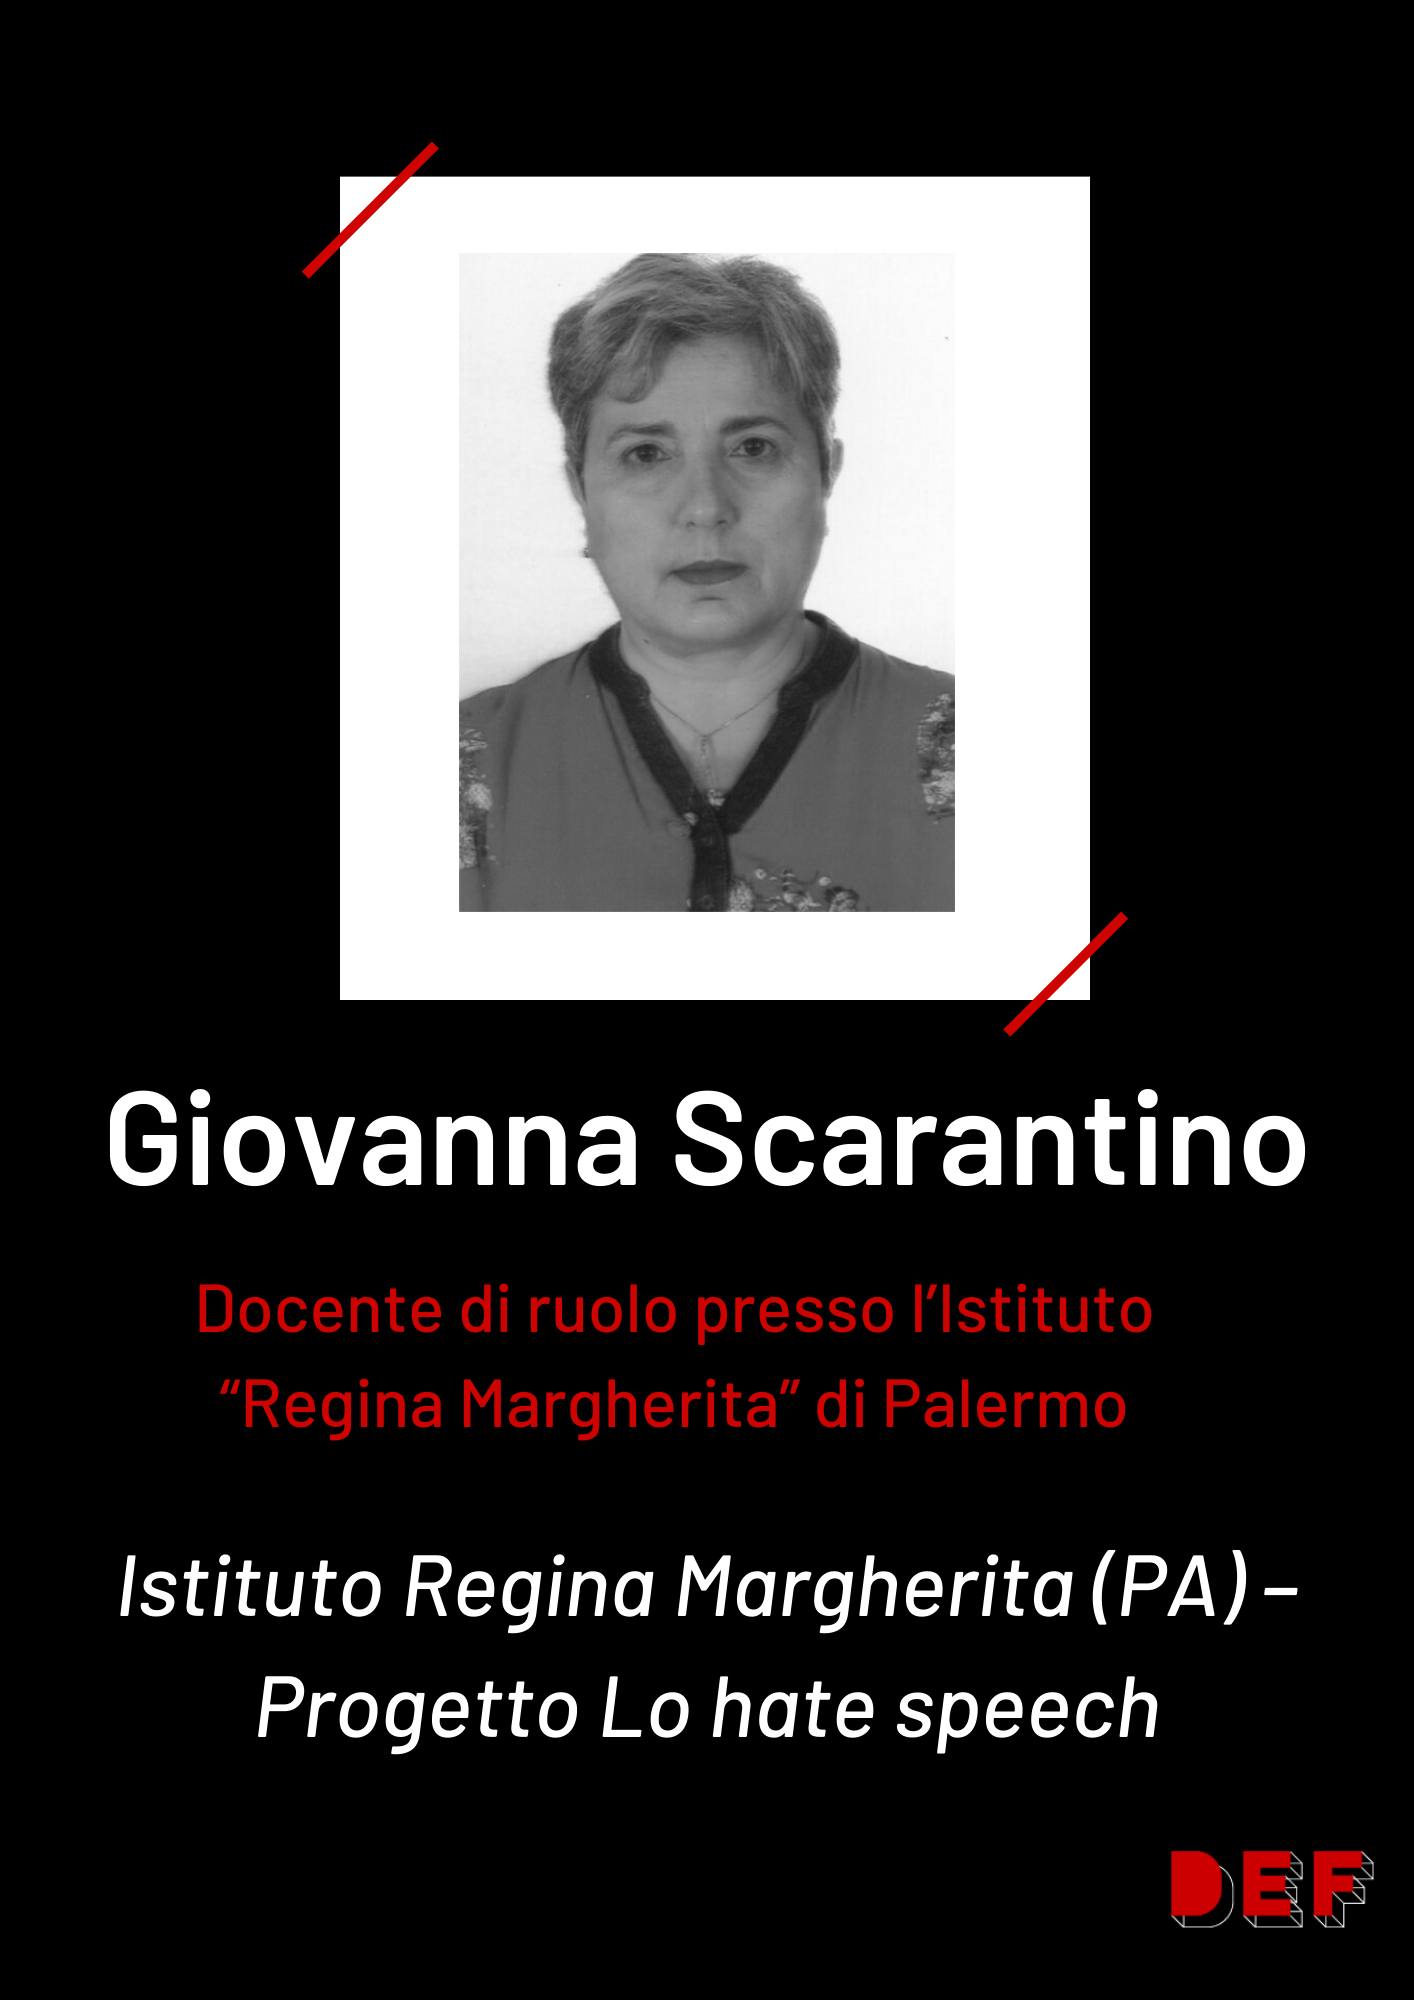 card Giovanna Scarantino - DEF23